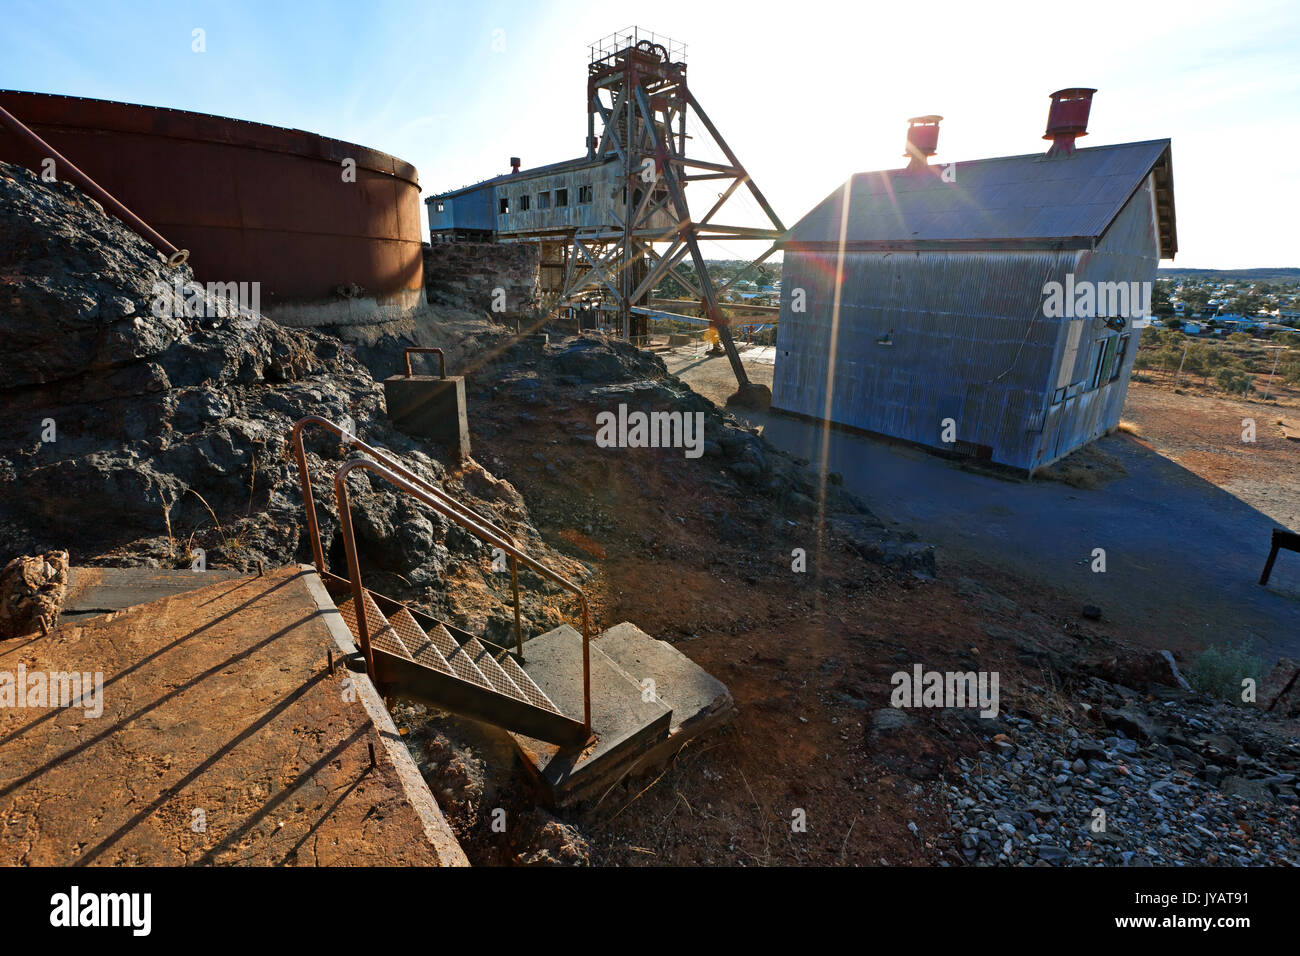 Erbe Abbaustätten im Outback australische Stadt Broken Hill in New South Wales, Australien Stockfoto